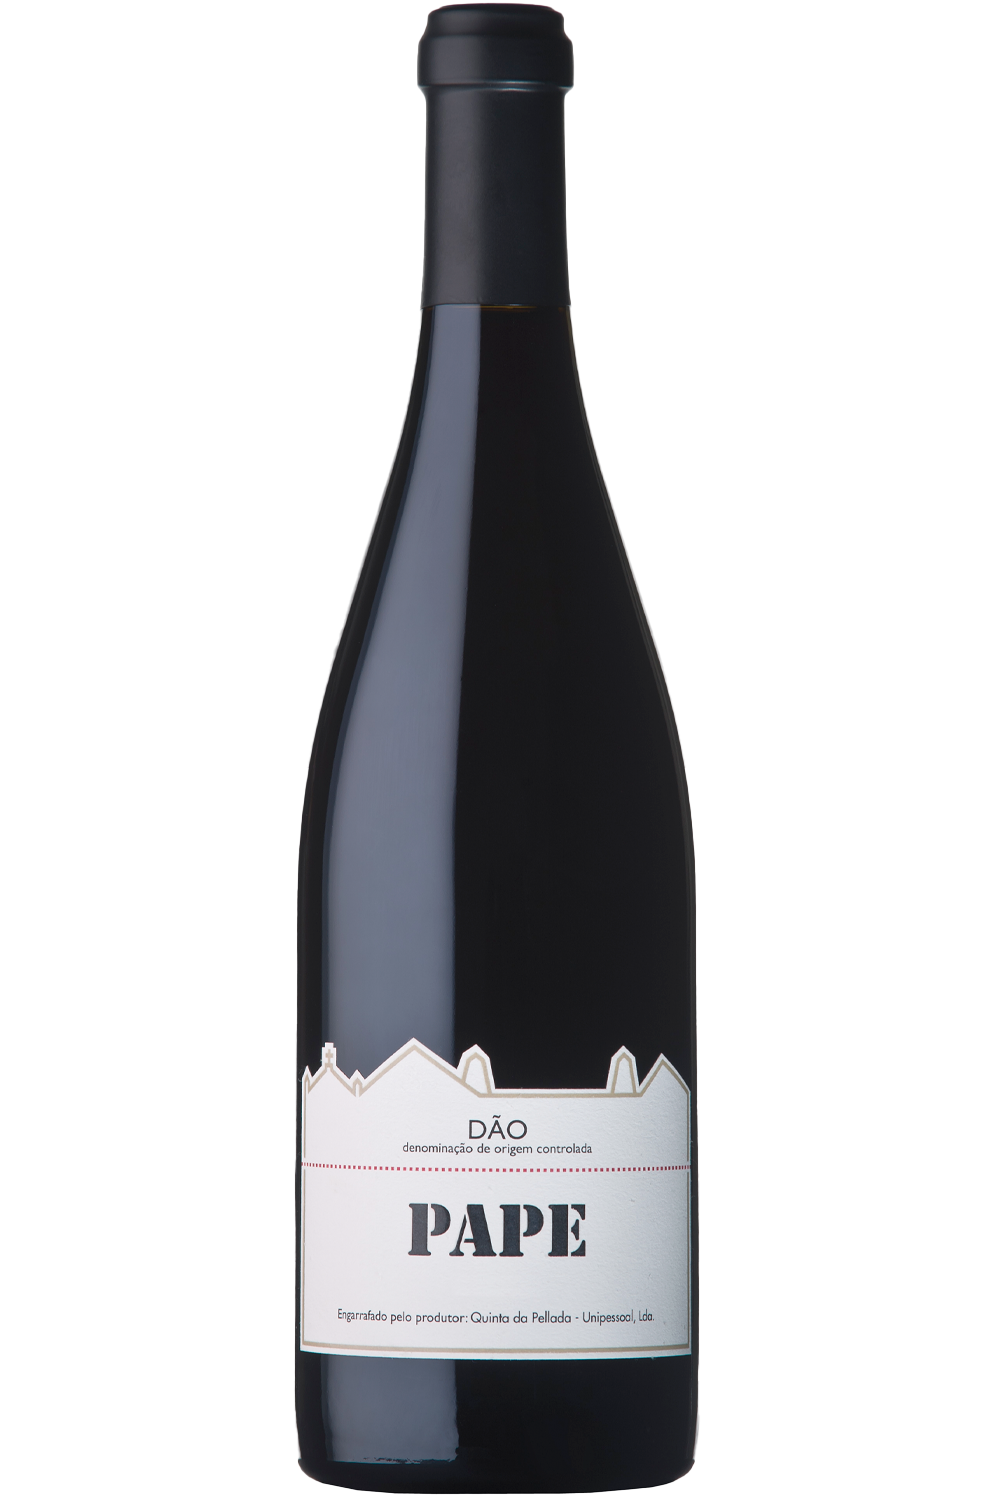 WineVins Pape Tinto 2019